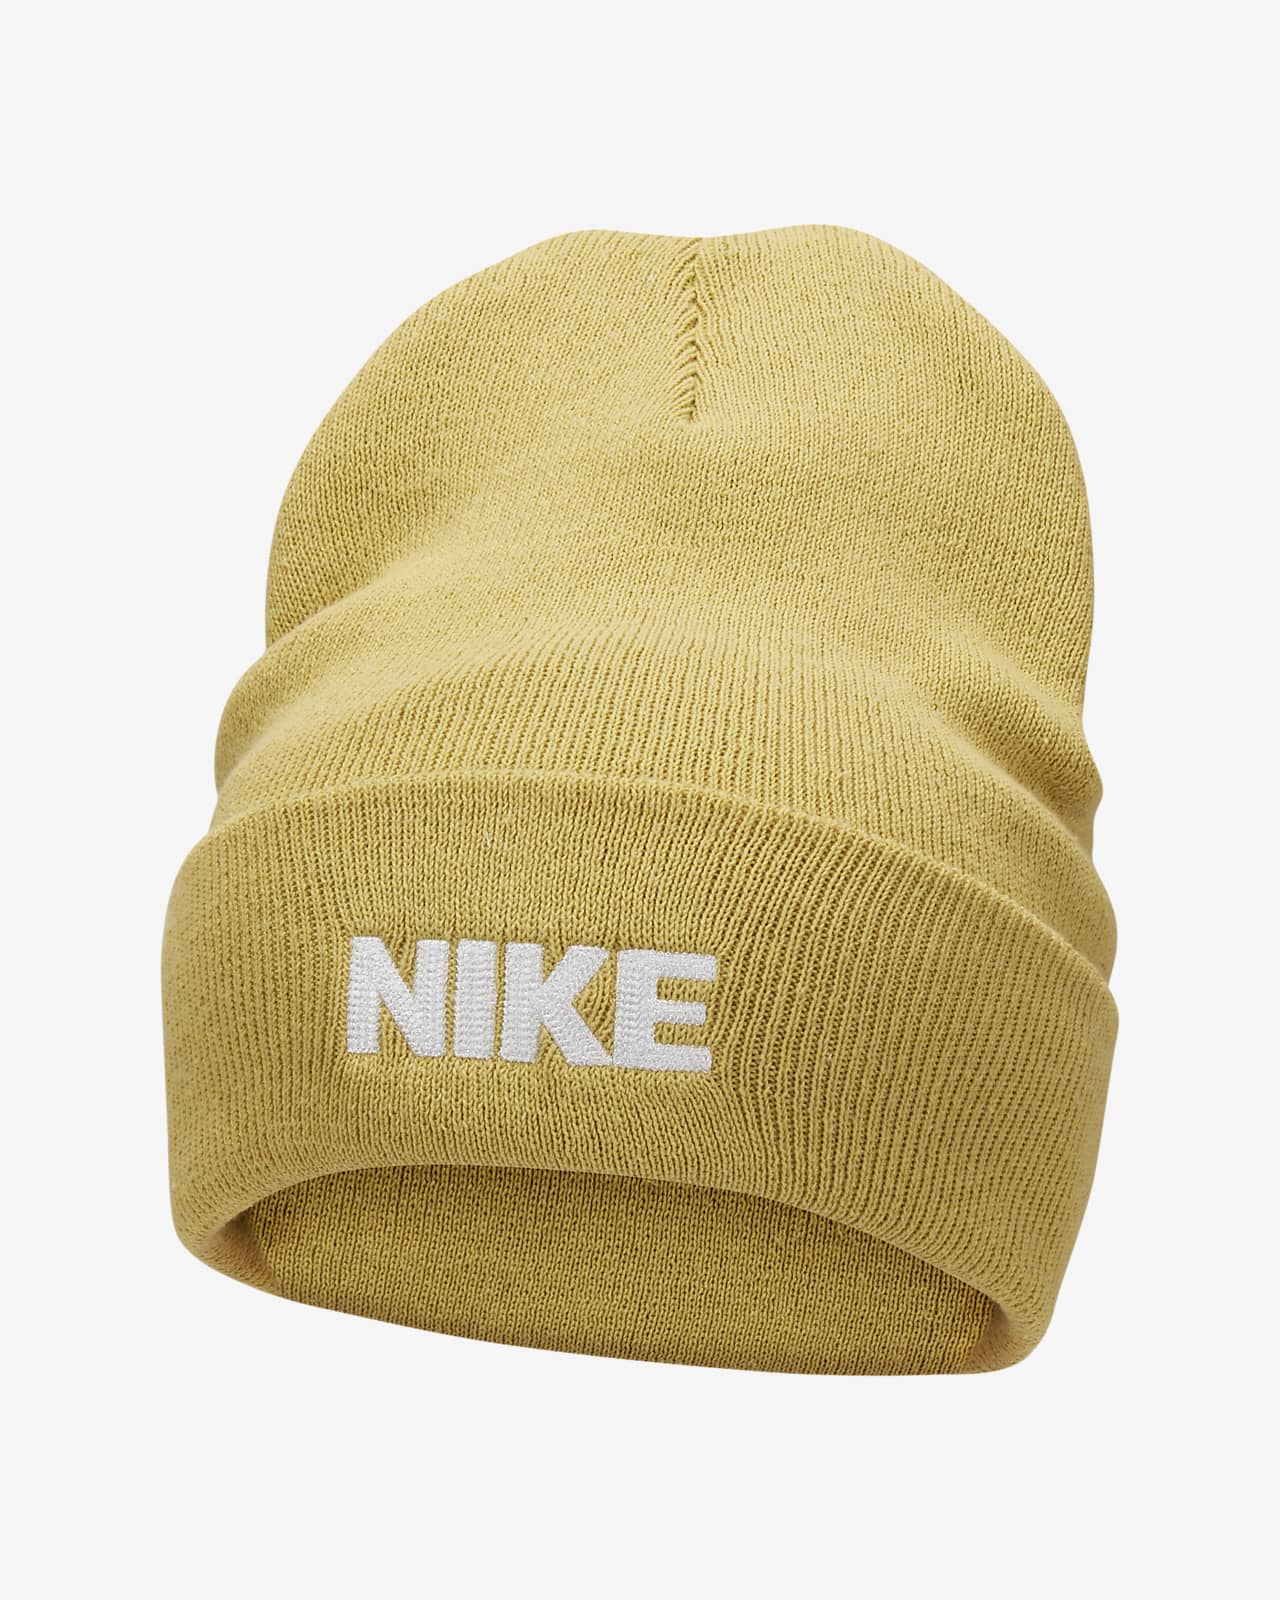 Nike Hut Hat Cap Chapeau Casquette Noir Woolie Beanie PEAK Unisexe